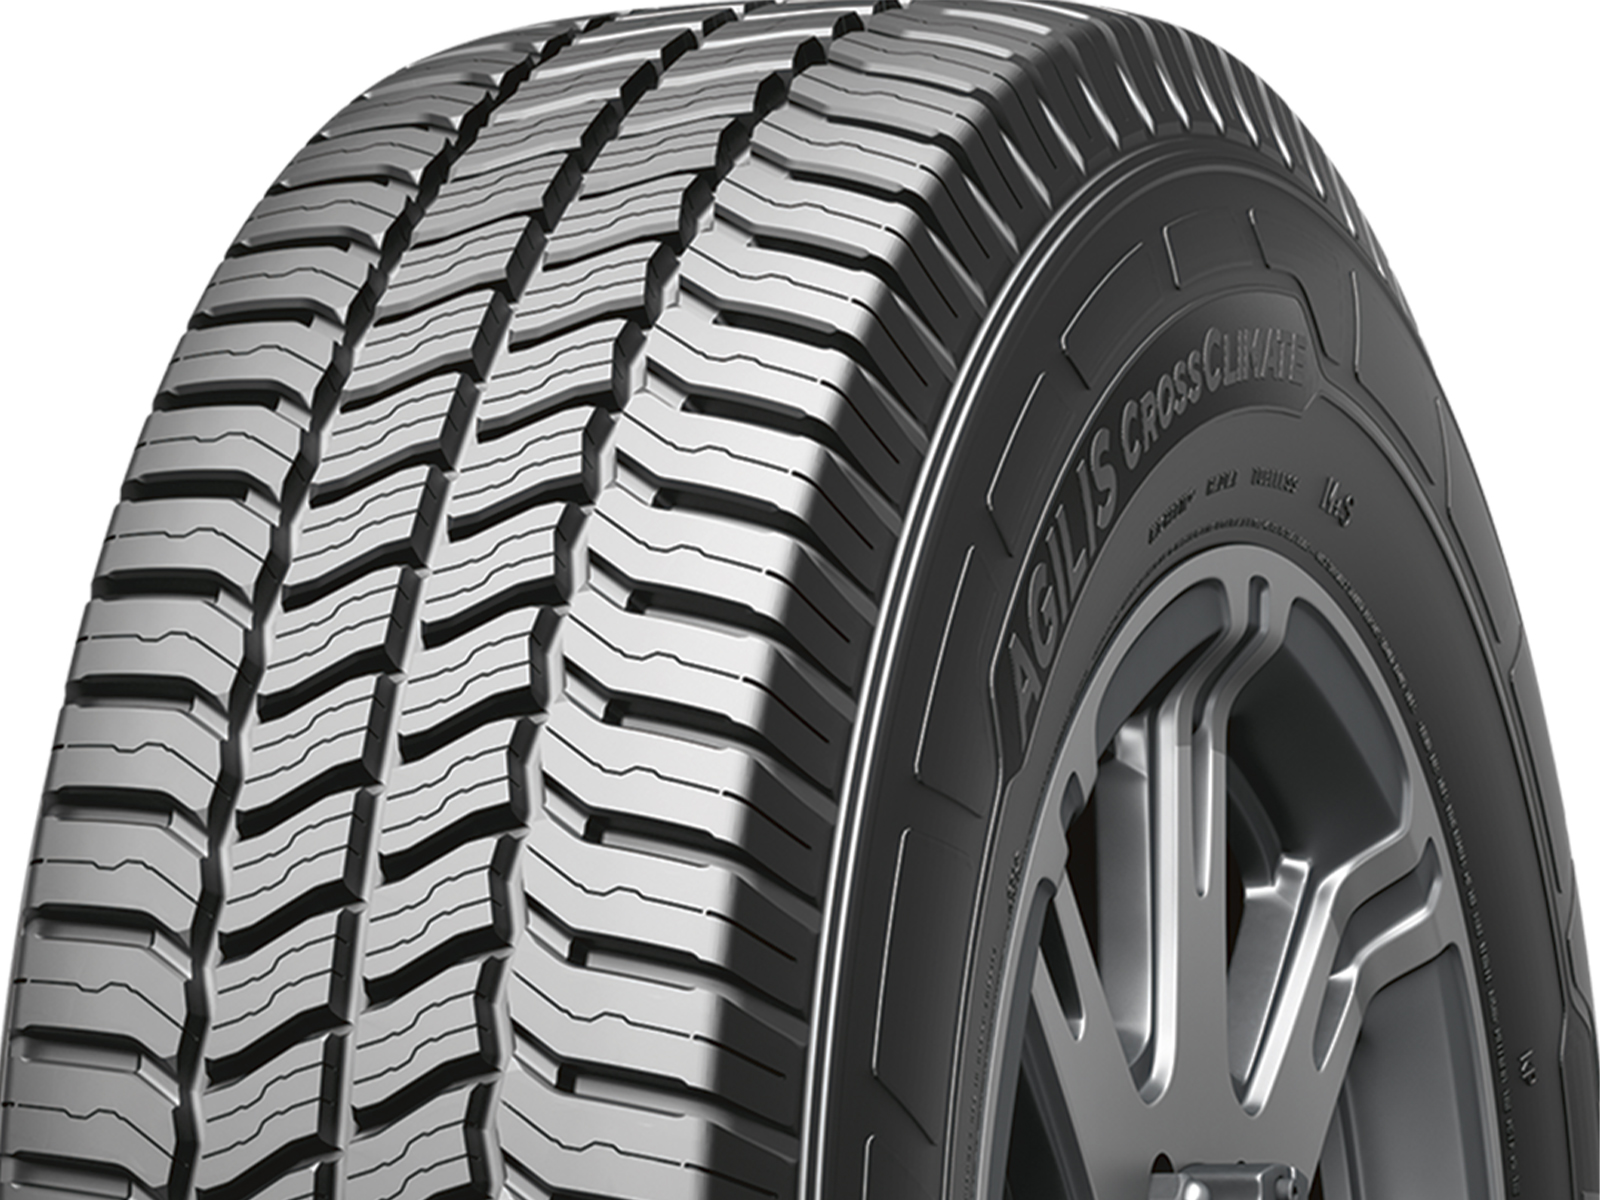 Ridge Michelin Rugged Climate Tires Agilis | Cross